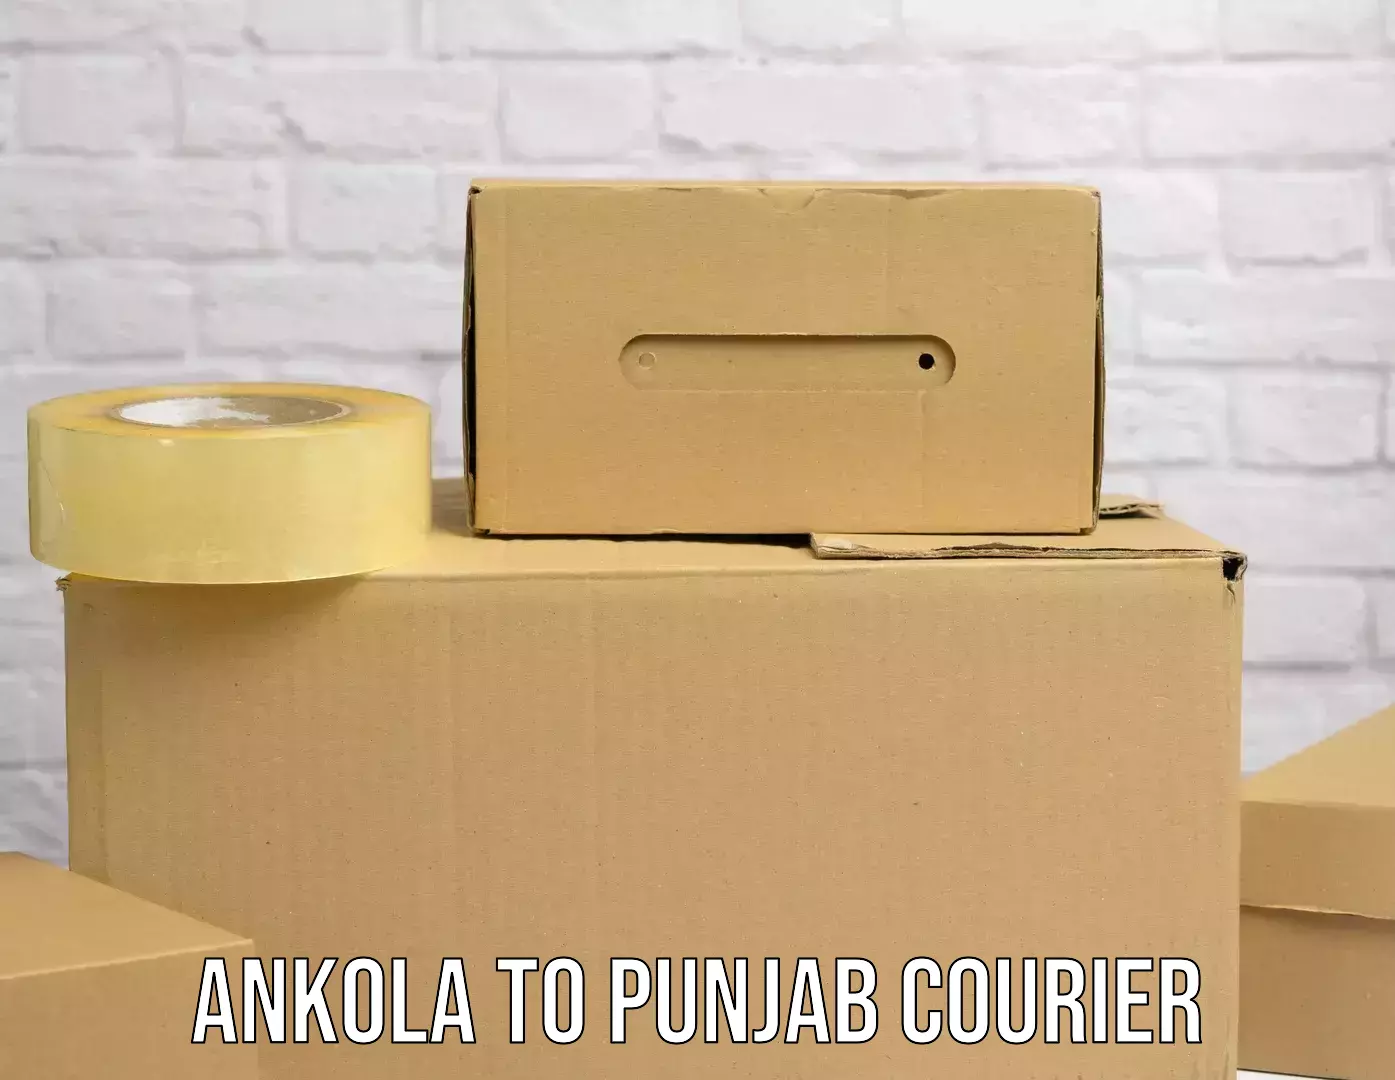 Express logistics service Ankola to Anandpur Sahib